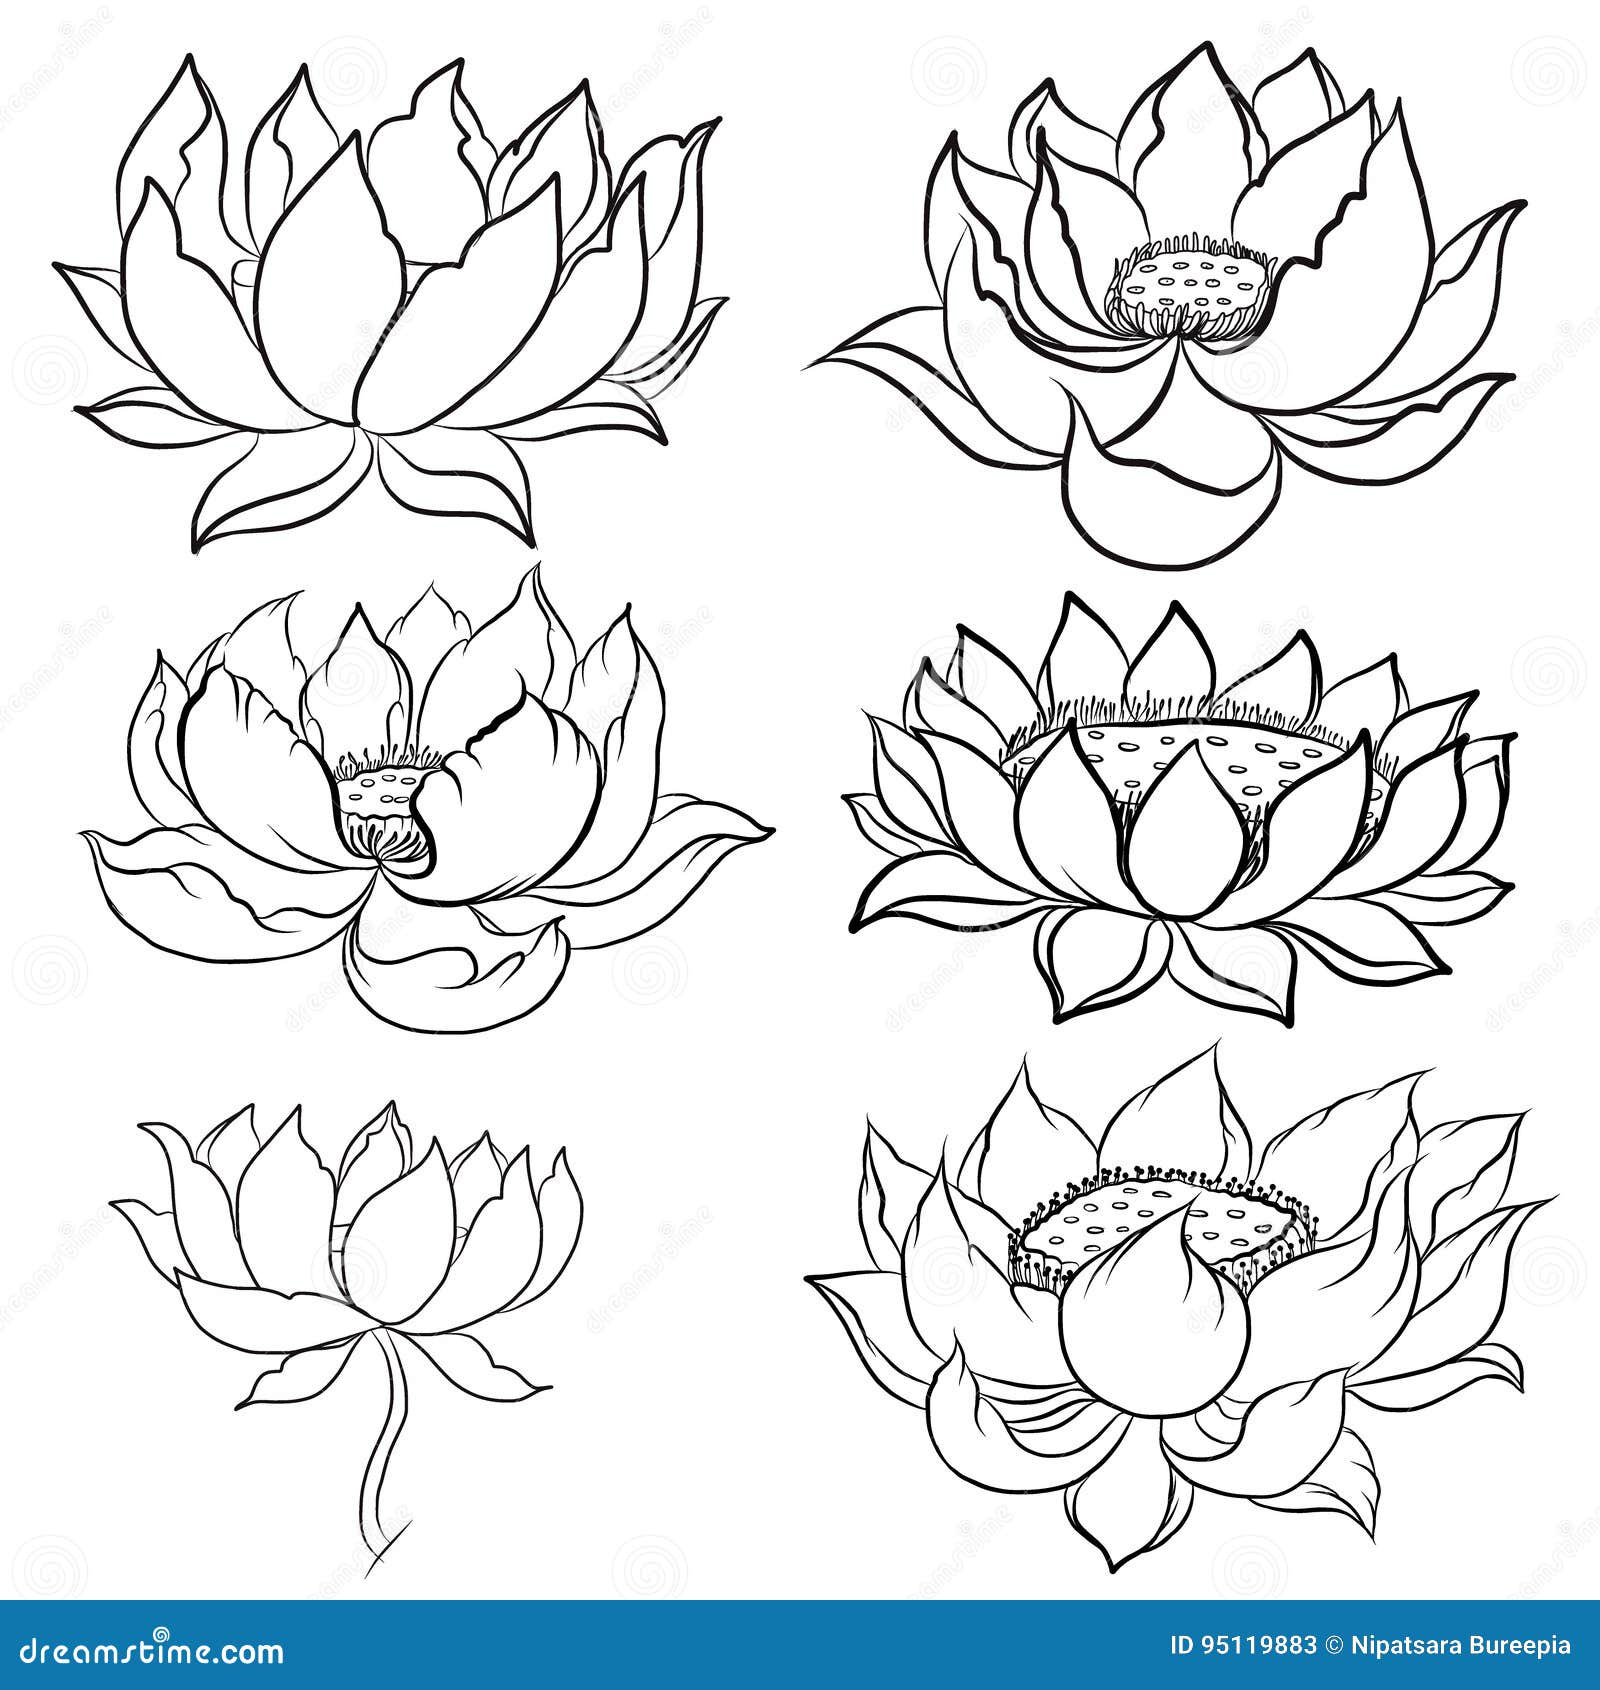 Inspirations Tattoo on Twitter Did this little lotus flower on Dan last  week Thanks again mate matthart inspirationstattoos leeds uk  sleevetattoo tattoo tattoos art tattooart japanesetattoo armani  httpstcoj7ufpJOjMU httpstco 